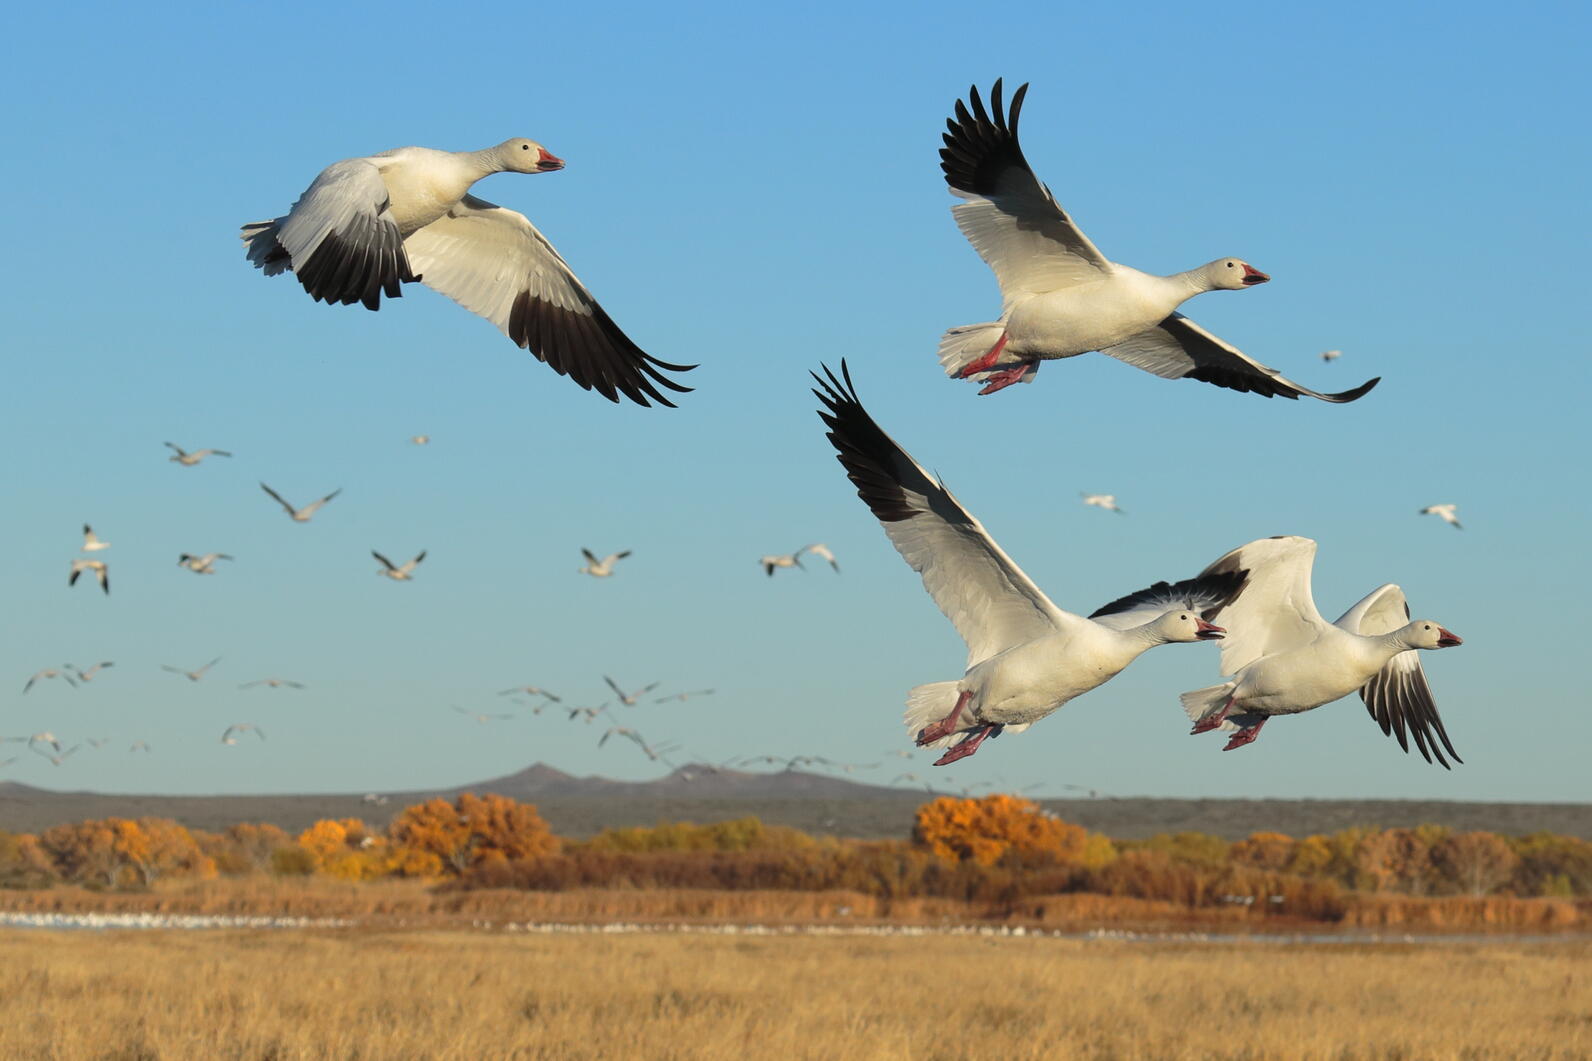 Snow Geese flying in clear blue skies